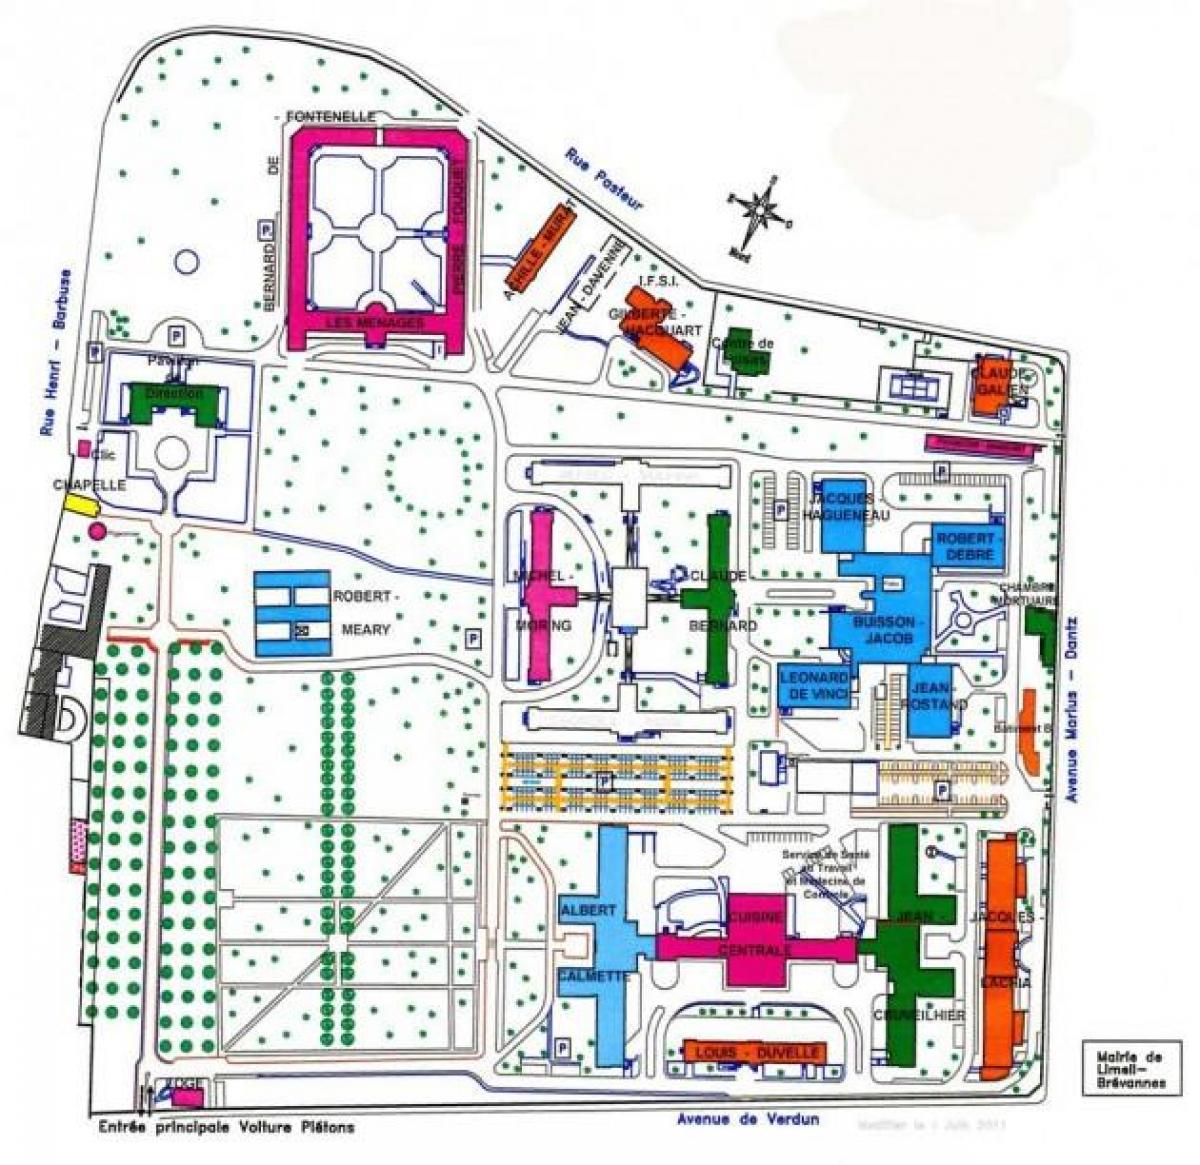 Peta dari Emile-Roux rumah sakit